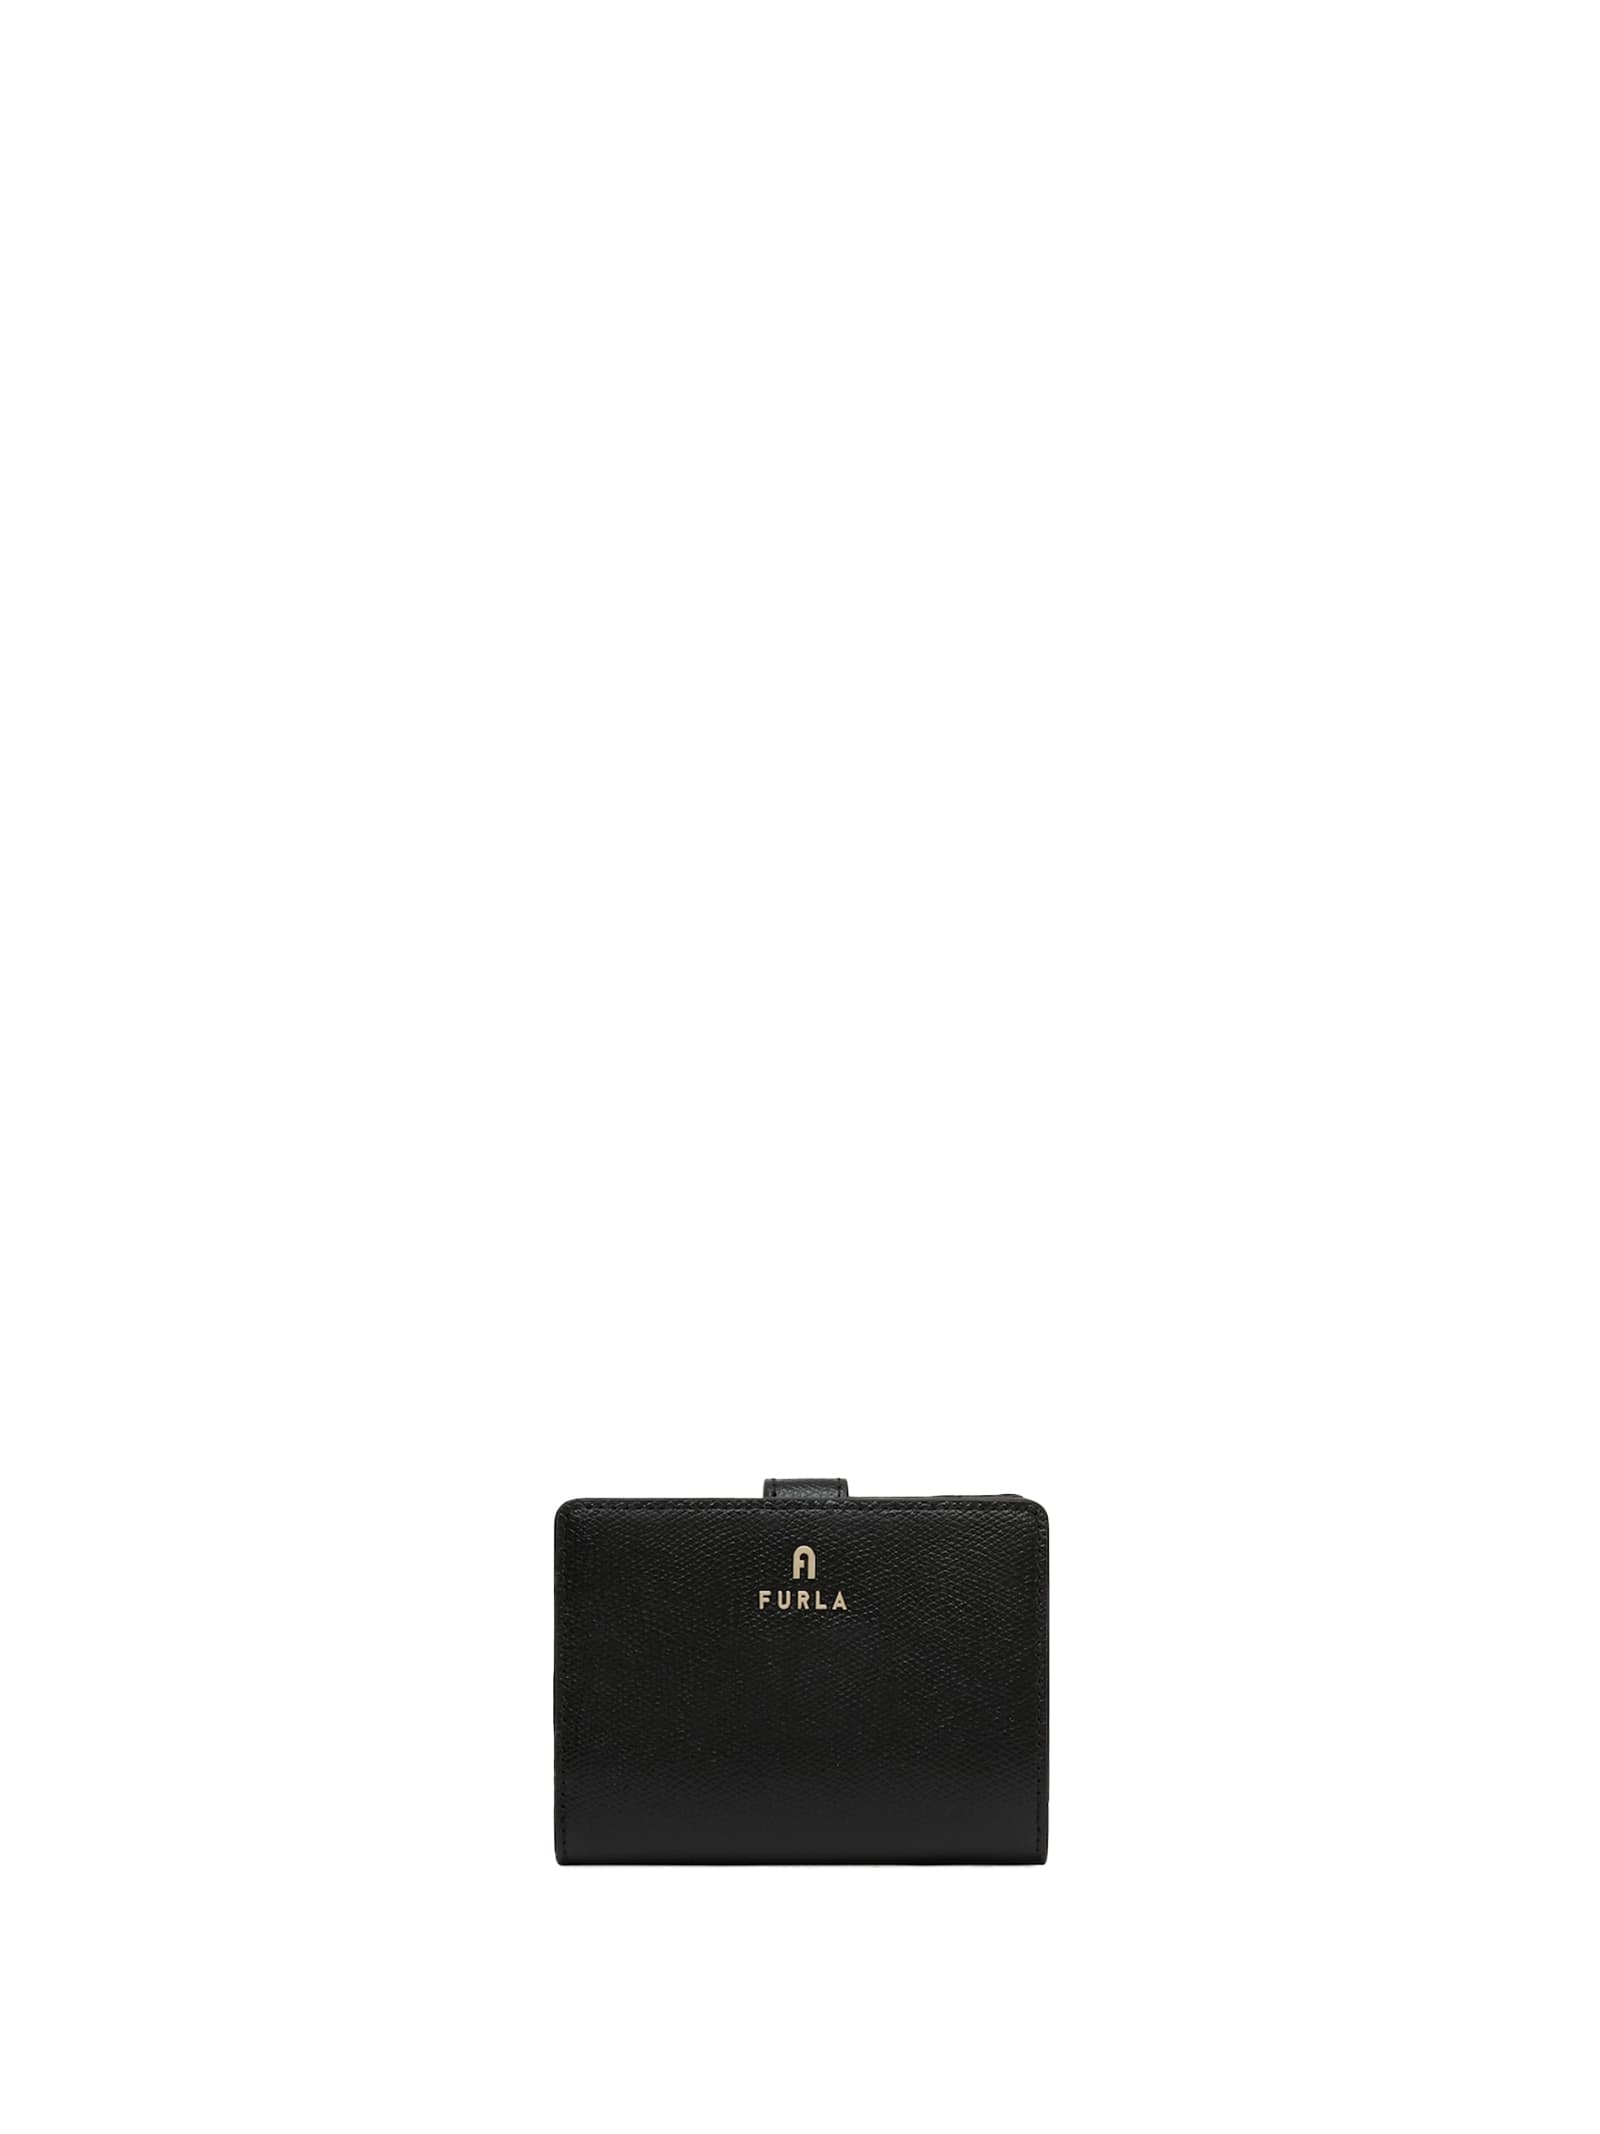 Furla Camelia S Compact Black Leather Wallet